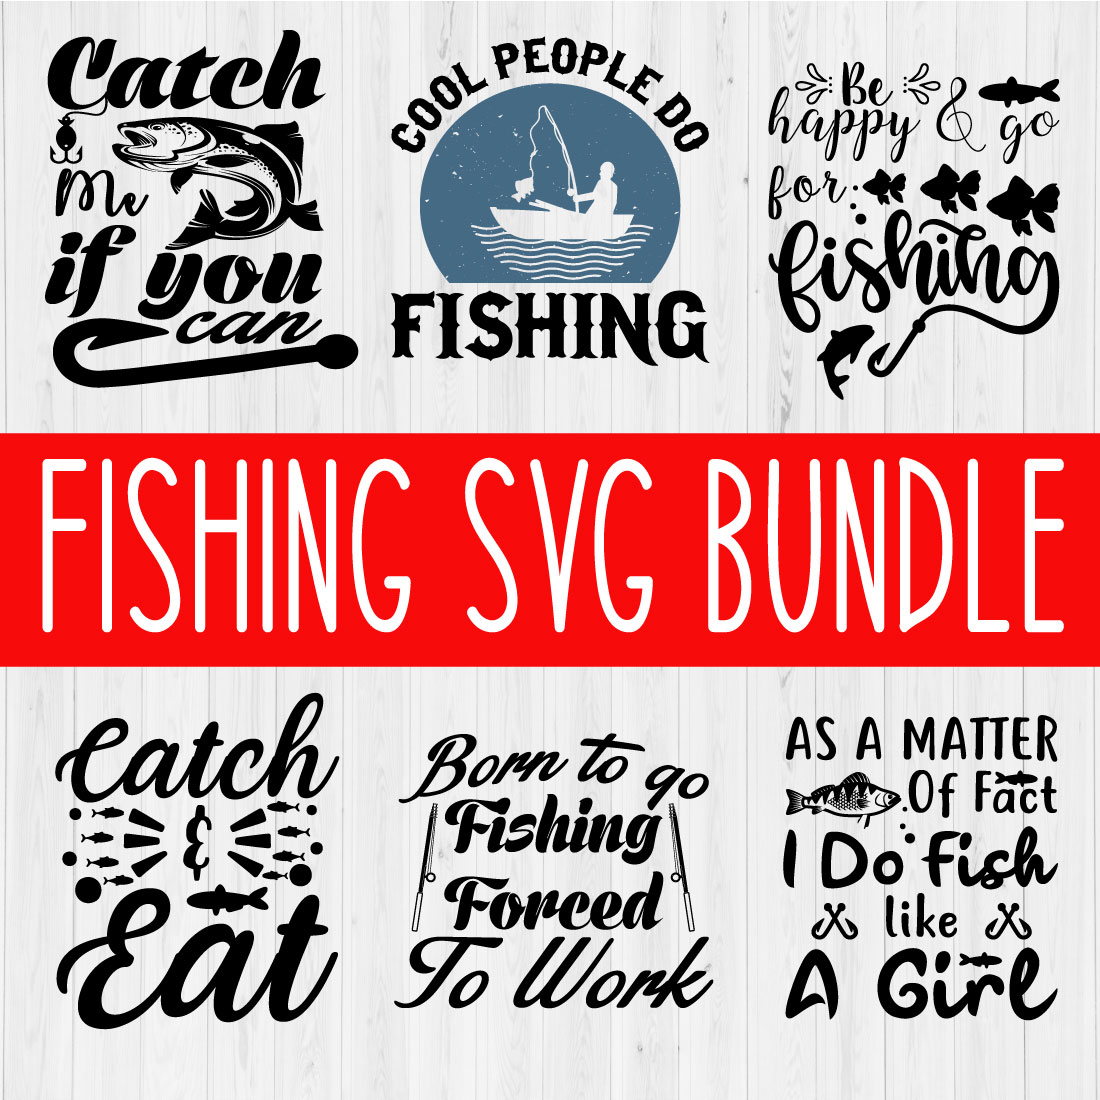 Fishing Svg Bundle Vol1 cover image.